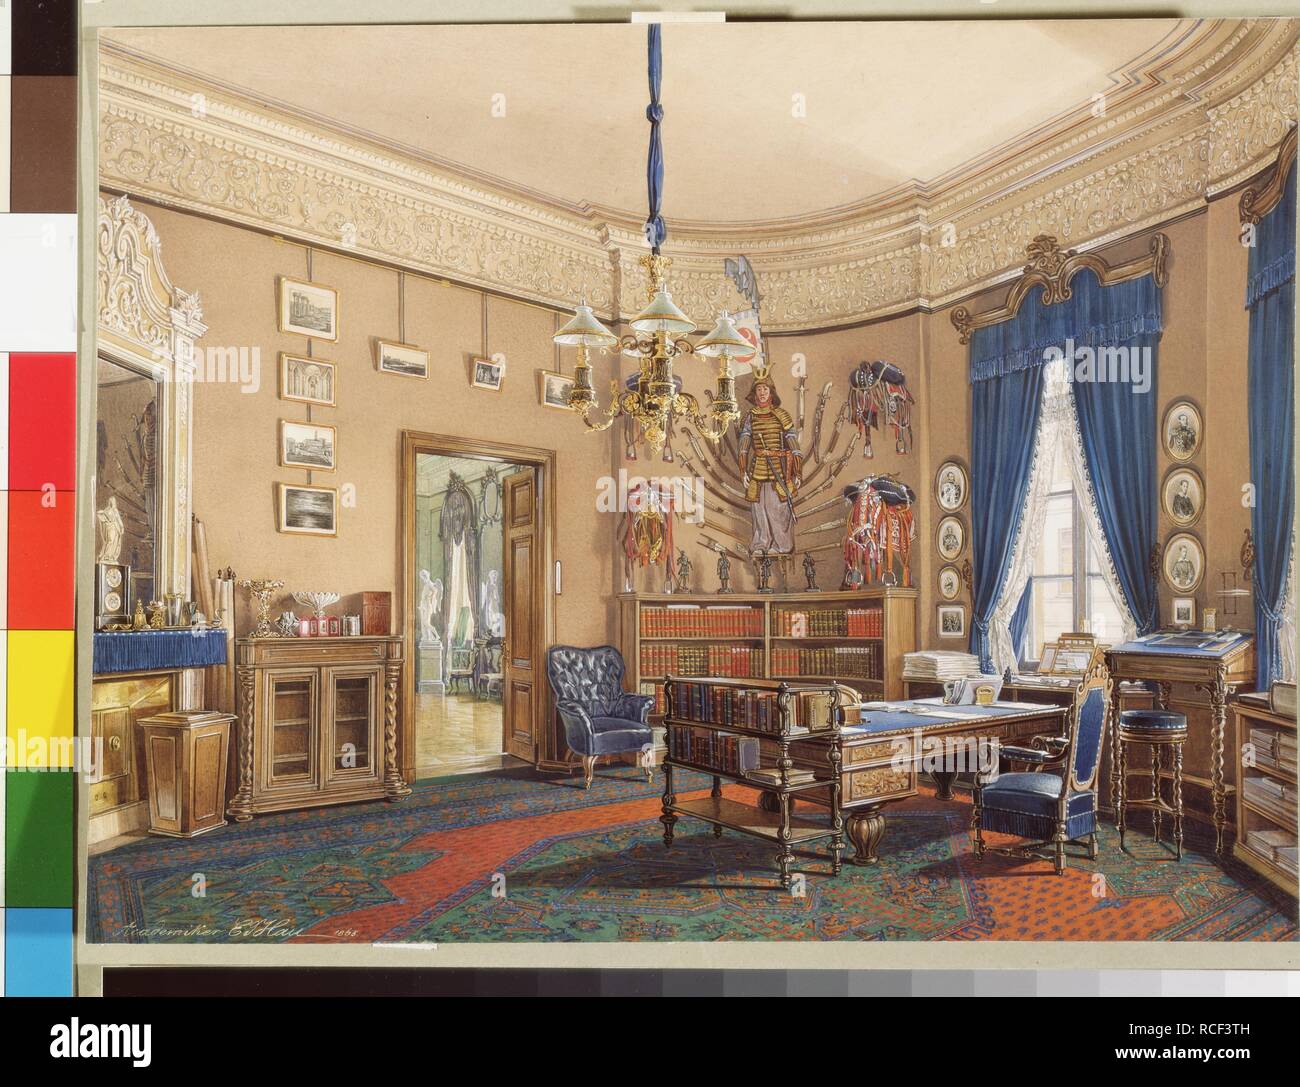 Interiors of the Winter Palace. The Study of Crown Prince Nikolay Aleksandrovich. Museum: State Hermitage, St. Petersburg. Author: HAU, EDUARD. Stock Photo